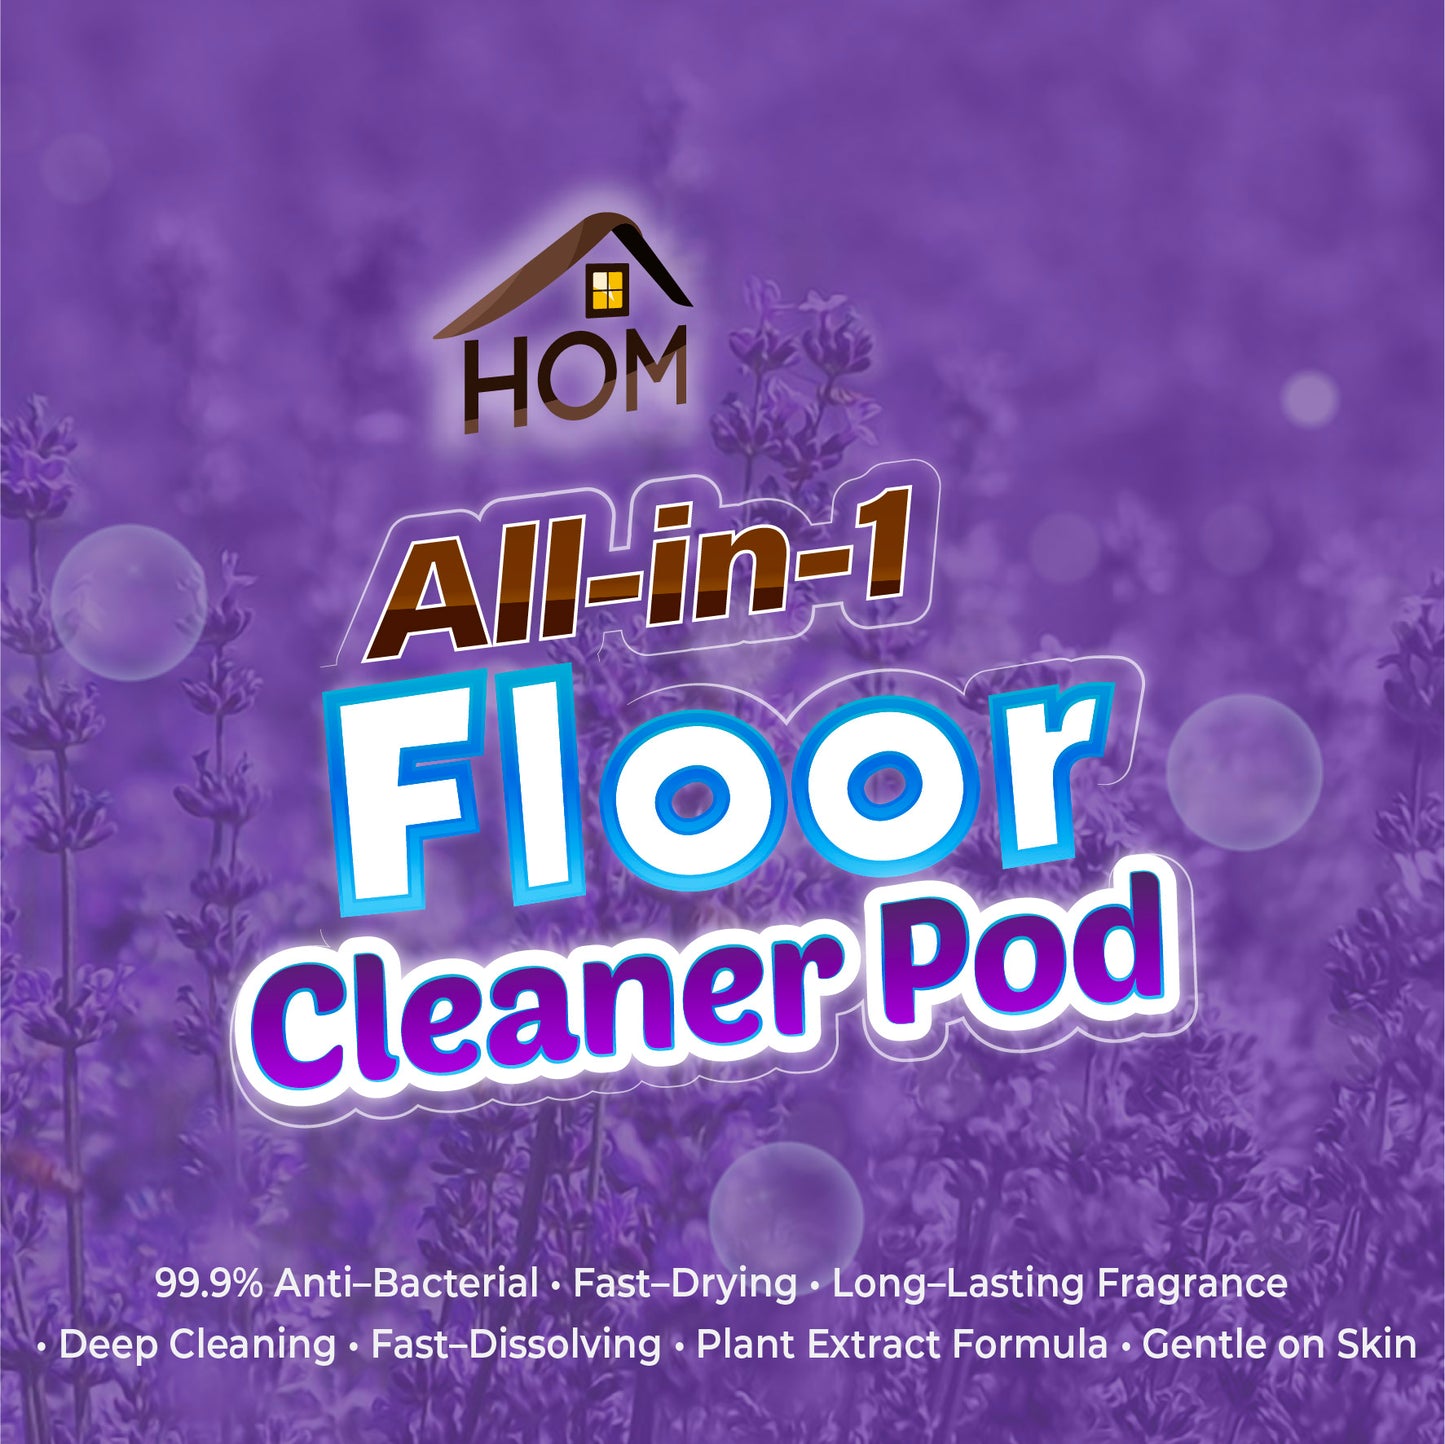 HOM All-in-1 Floor Cleaner Pods